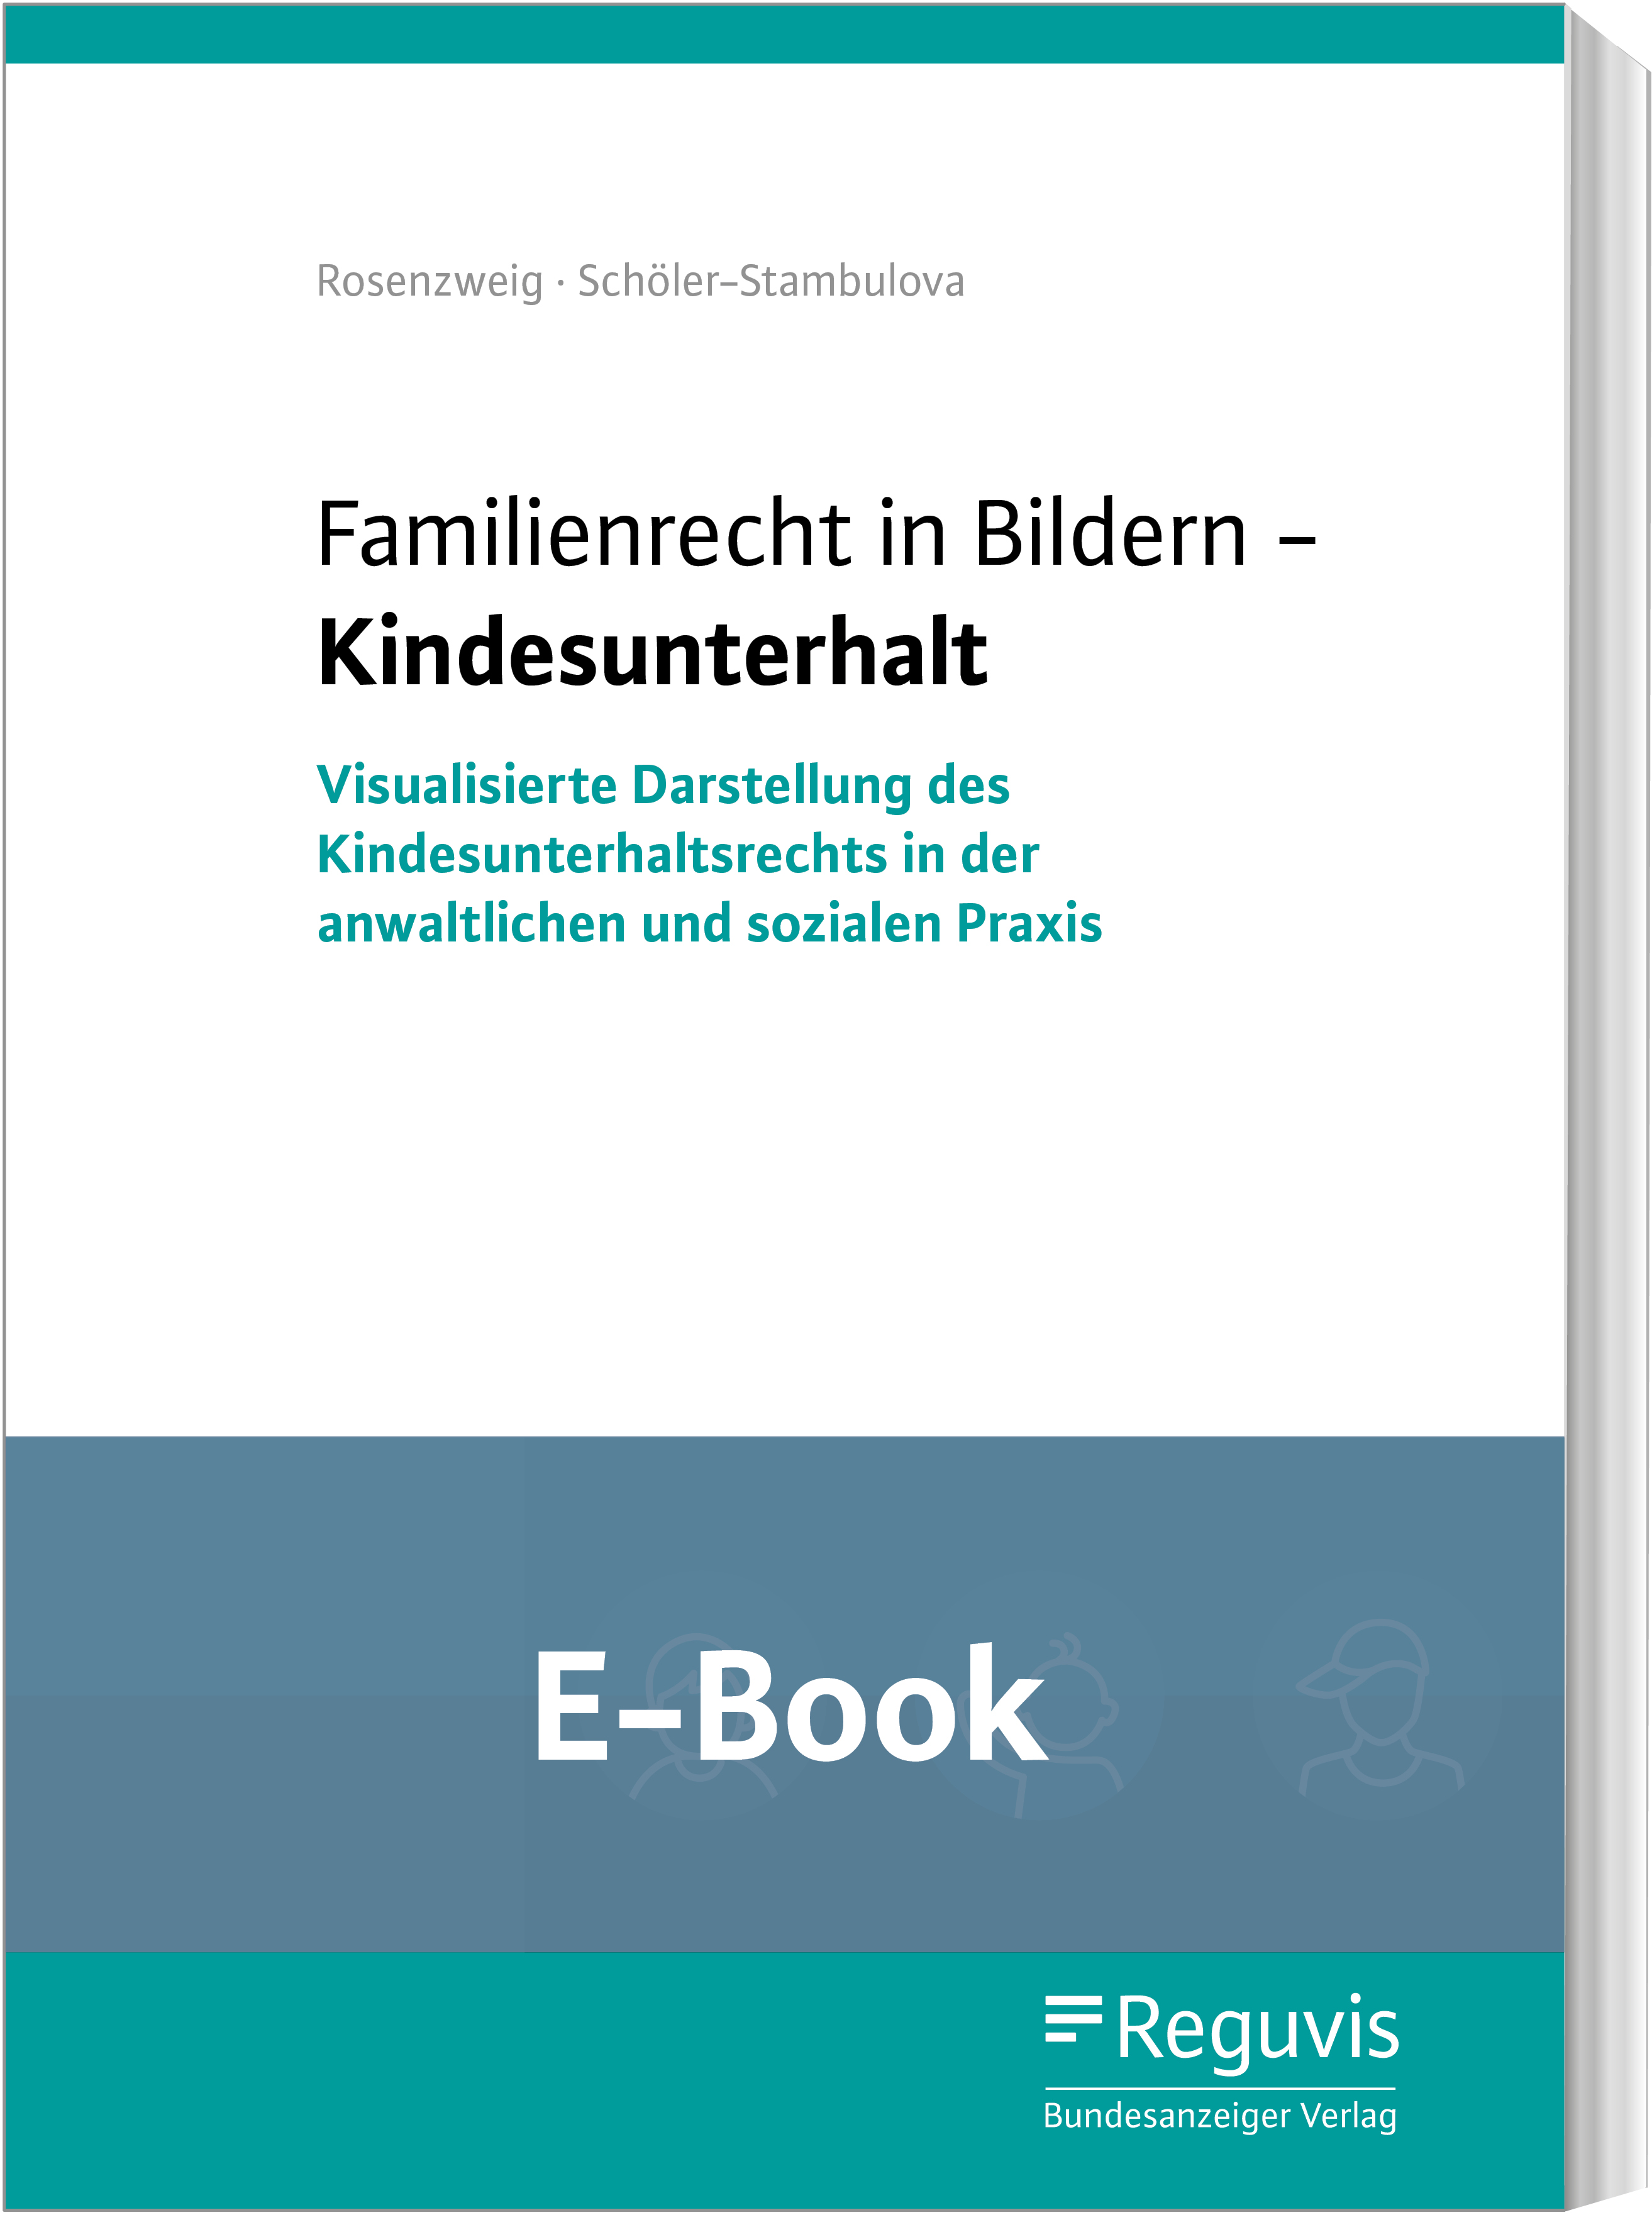 Familienrecht in Bildern - Kindesunterhalt (E-Book)